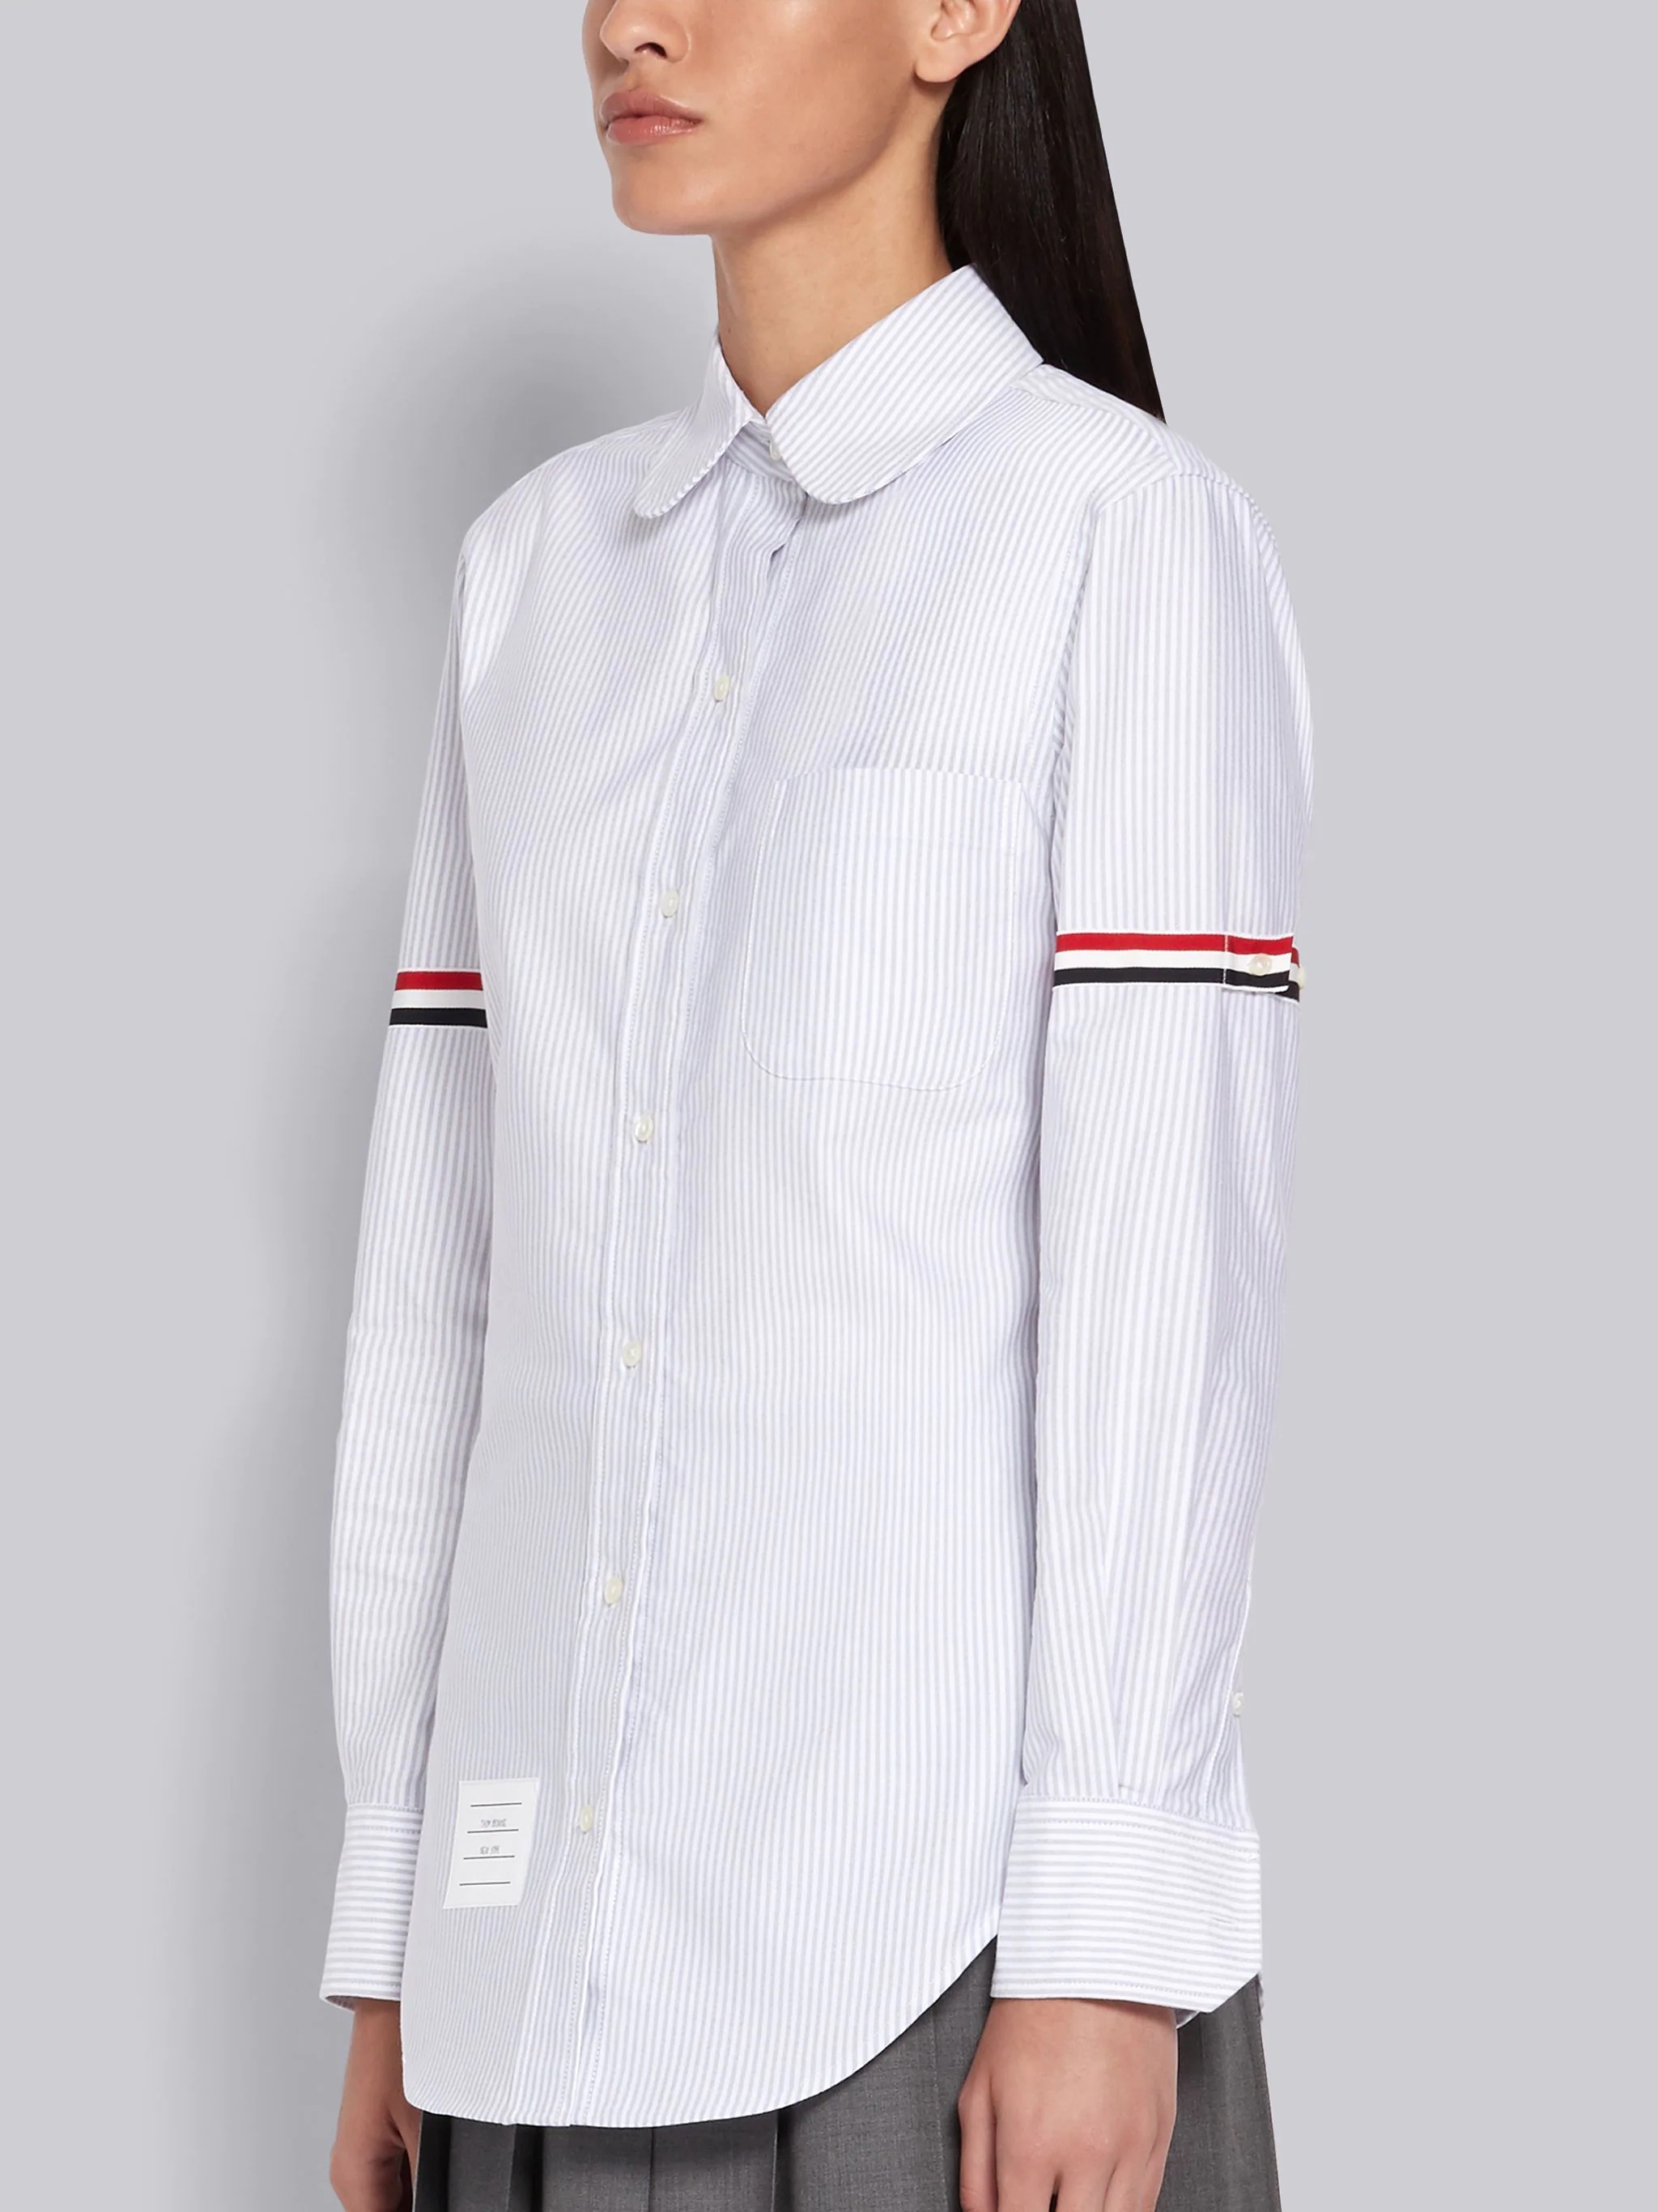 Medium Grey University Stripe Oxford Grosgrain Armband Long Sleeve Shirt - 2